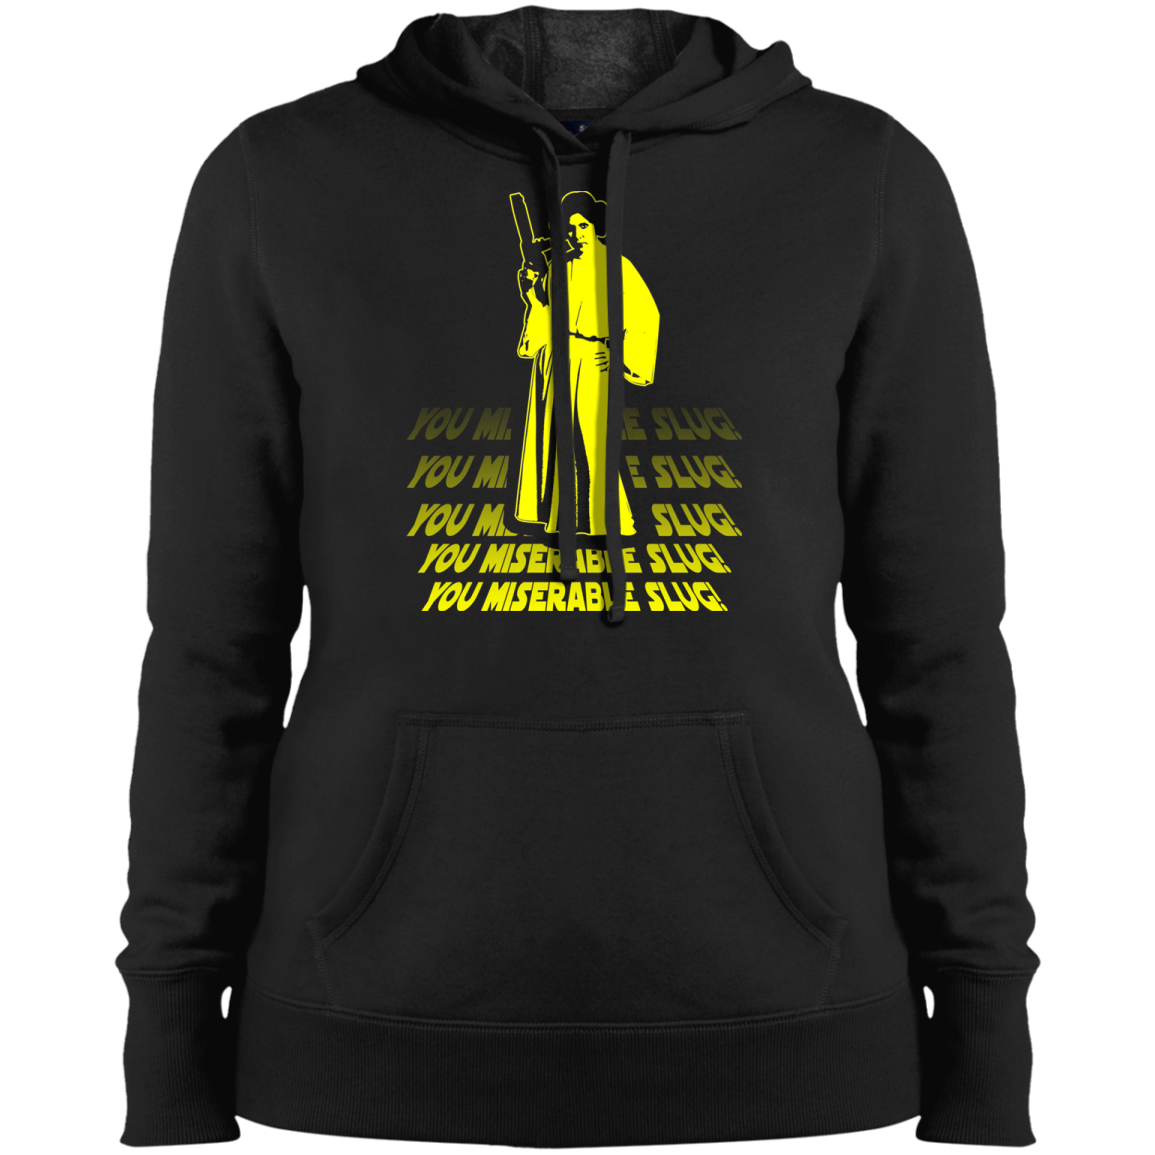 ArtichokeUSA Custom Design. You Miserable Slug. Carrie Fisher Tribute. Star Wars / Blues Brothers Fan Art. Parody. Ladies' Pullover Hooded Sweatshirt